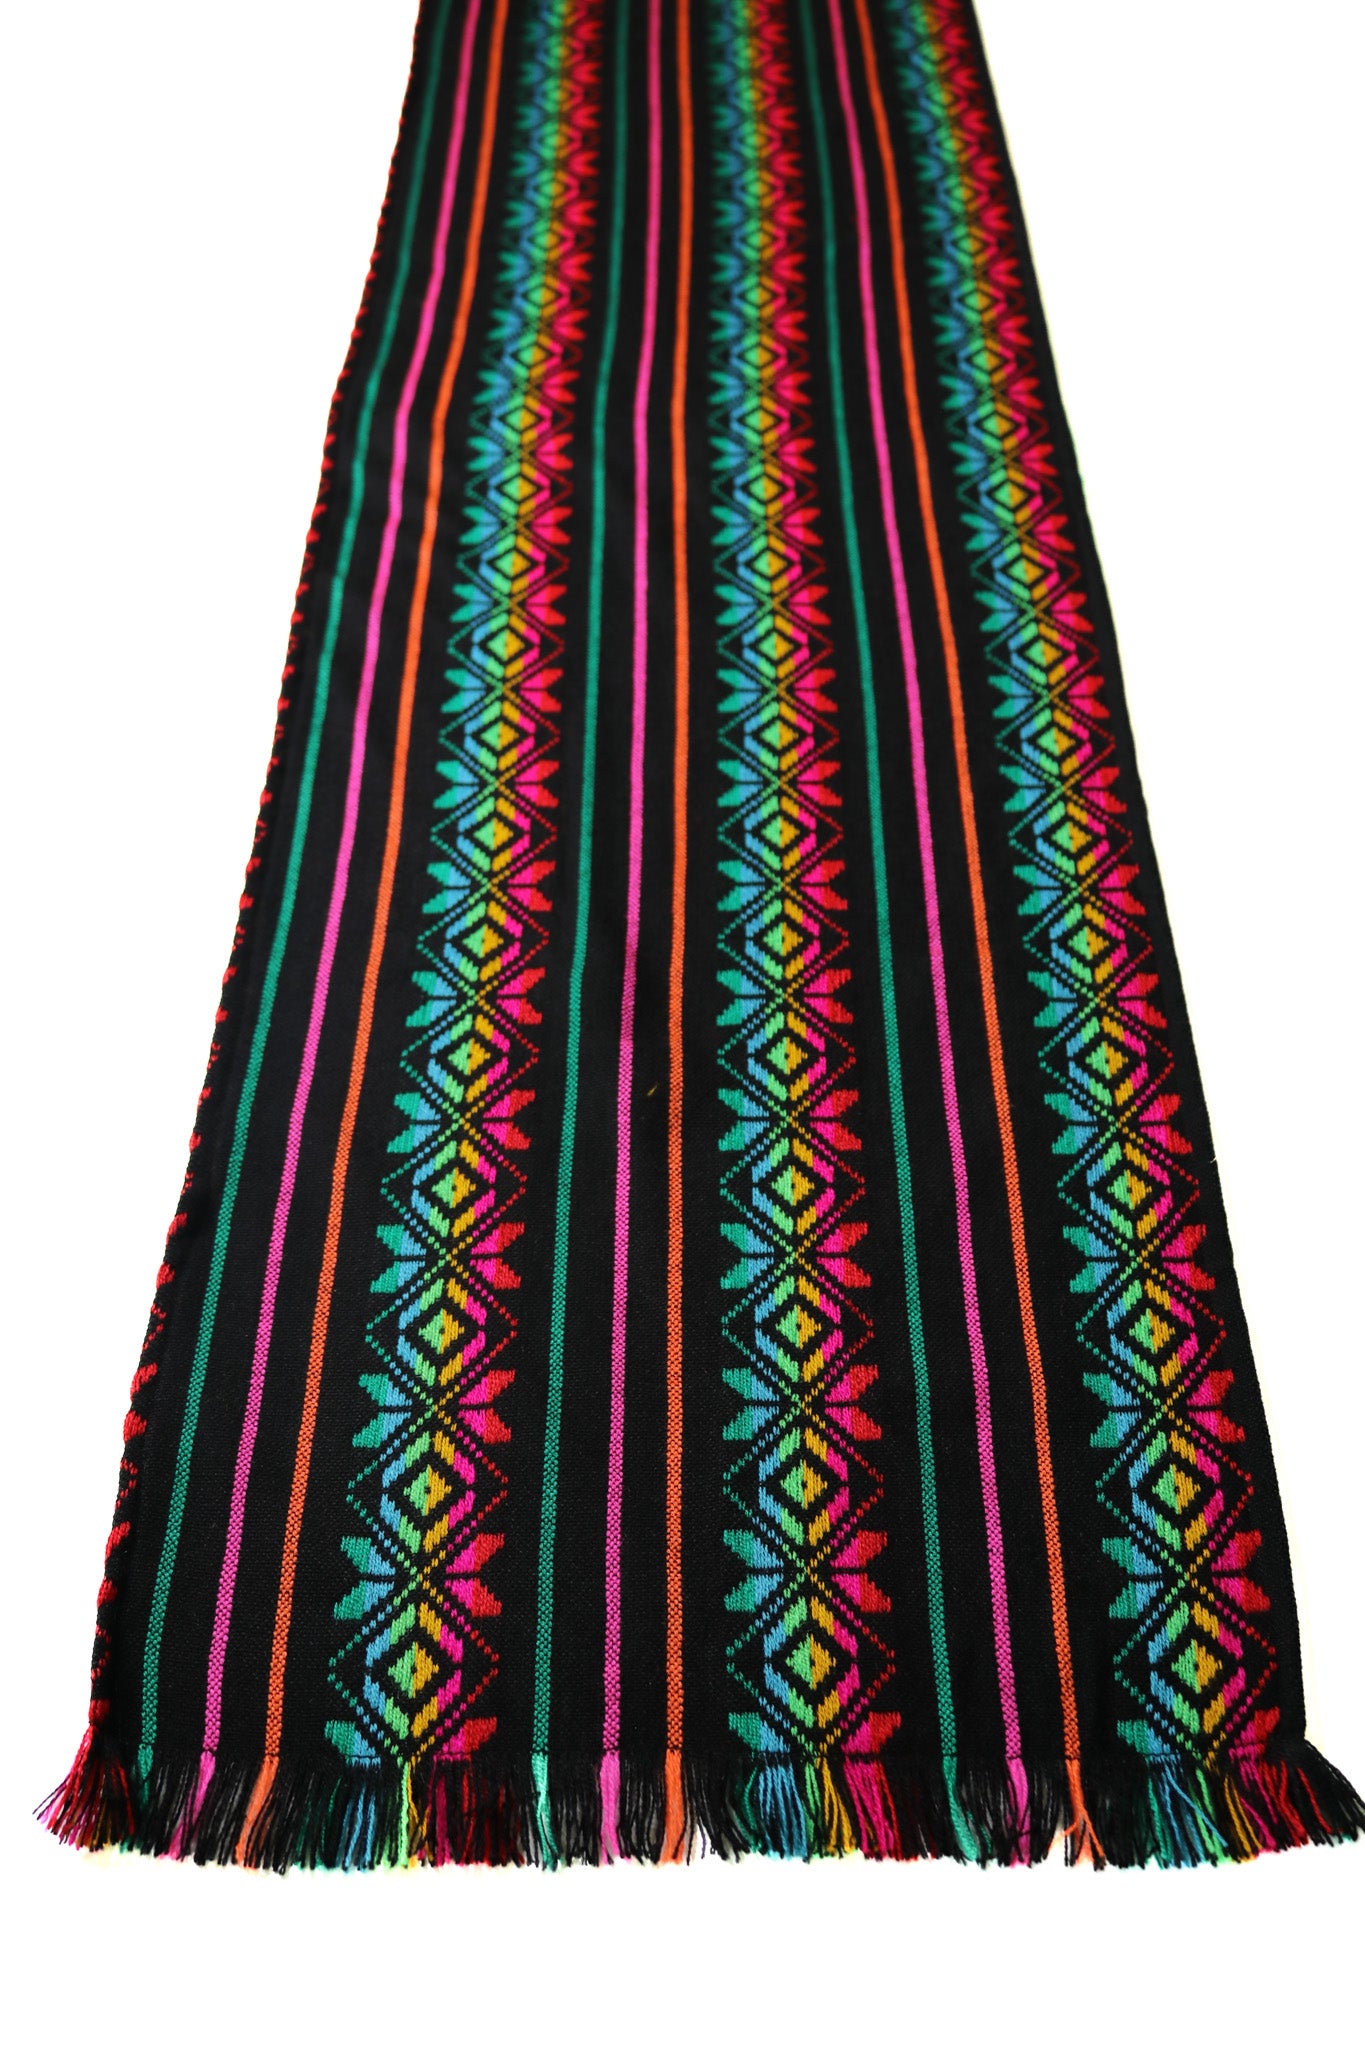 Mexican Fabric Table Runner - Bohemian black